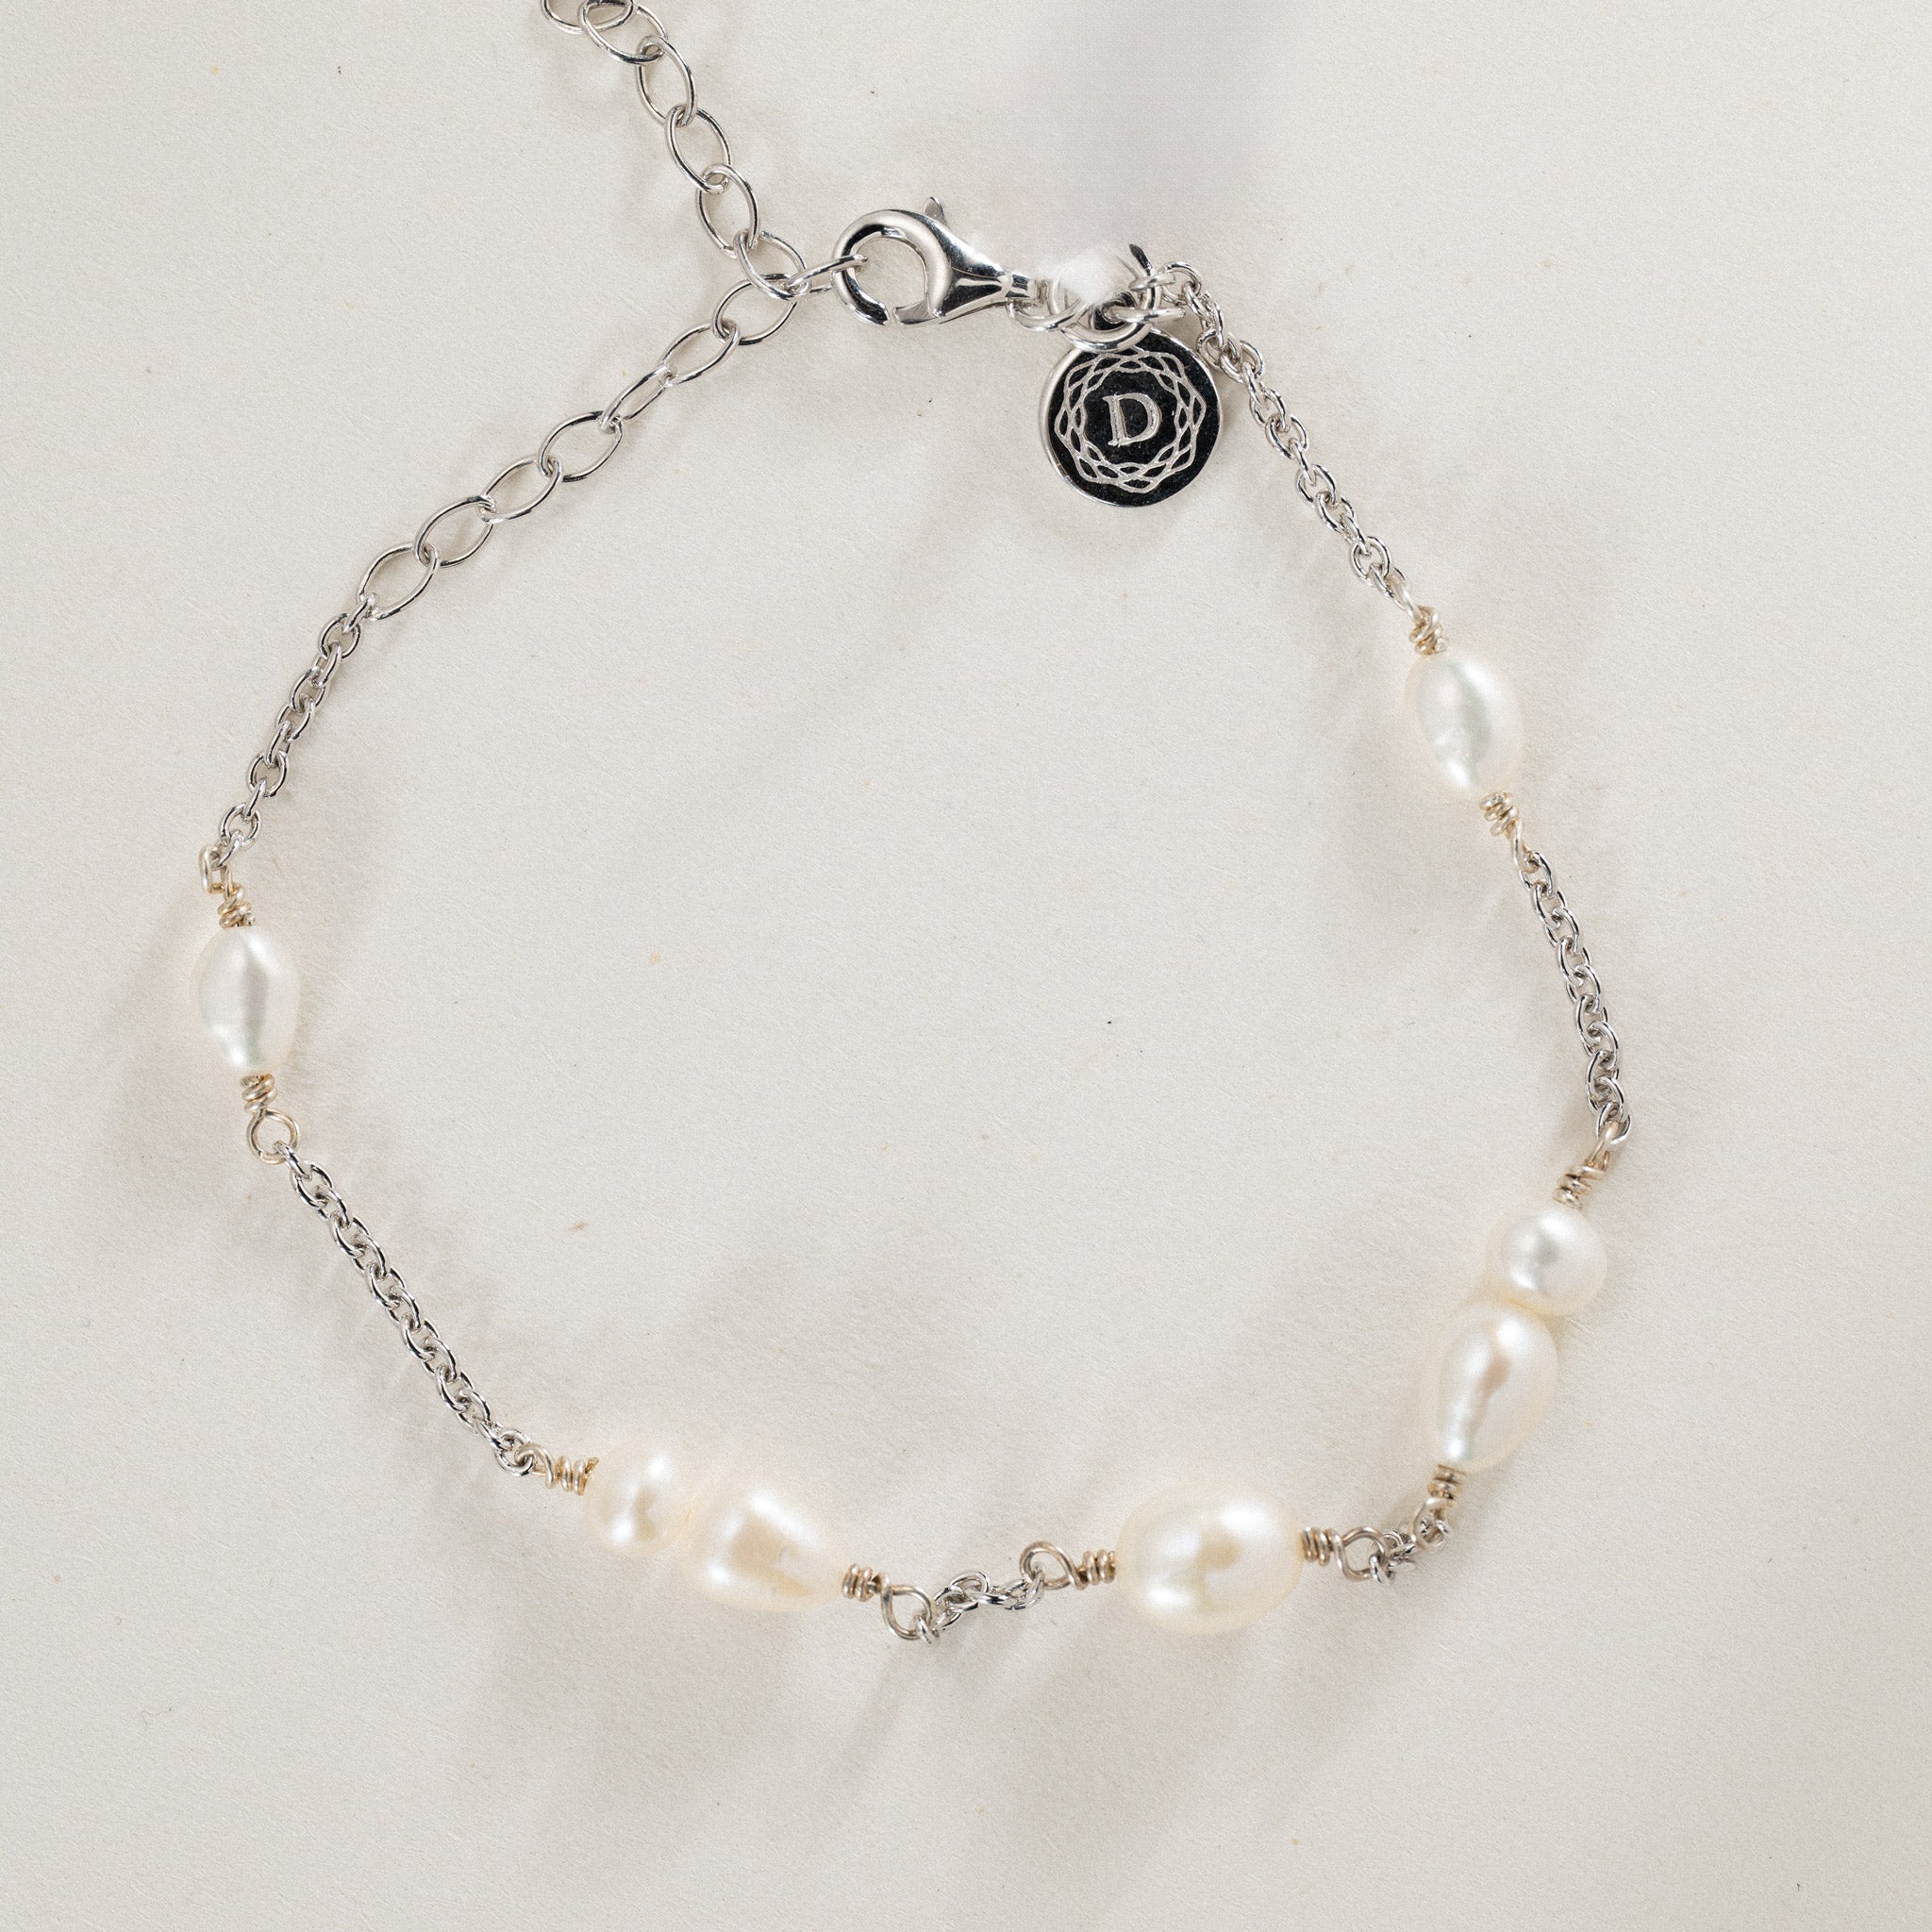 No. 23 - White freshwater pearl bracelet in rhodium silver